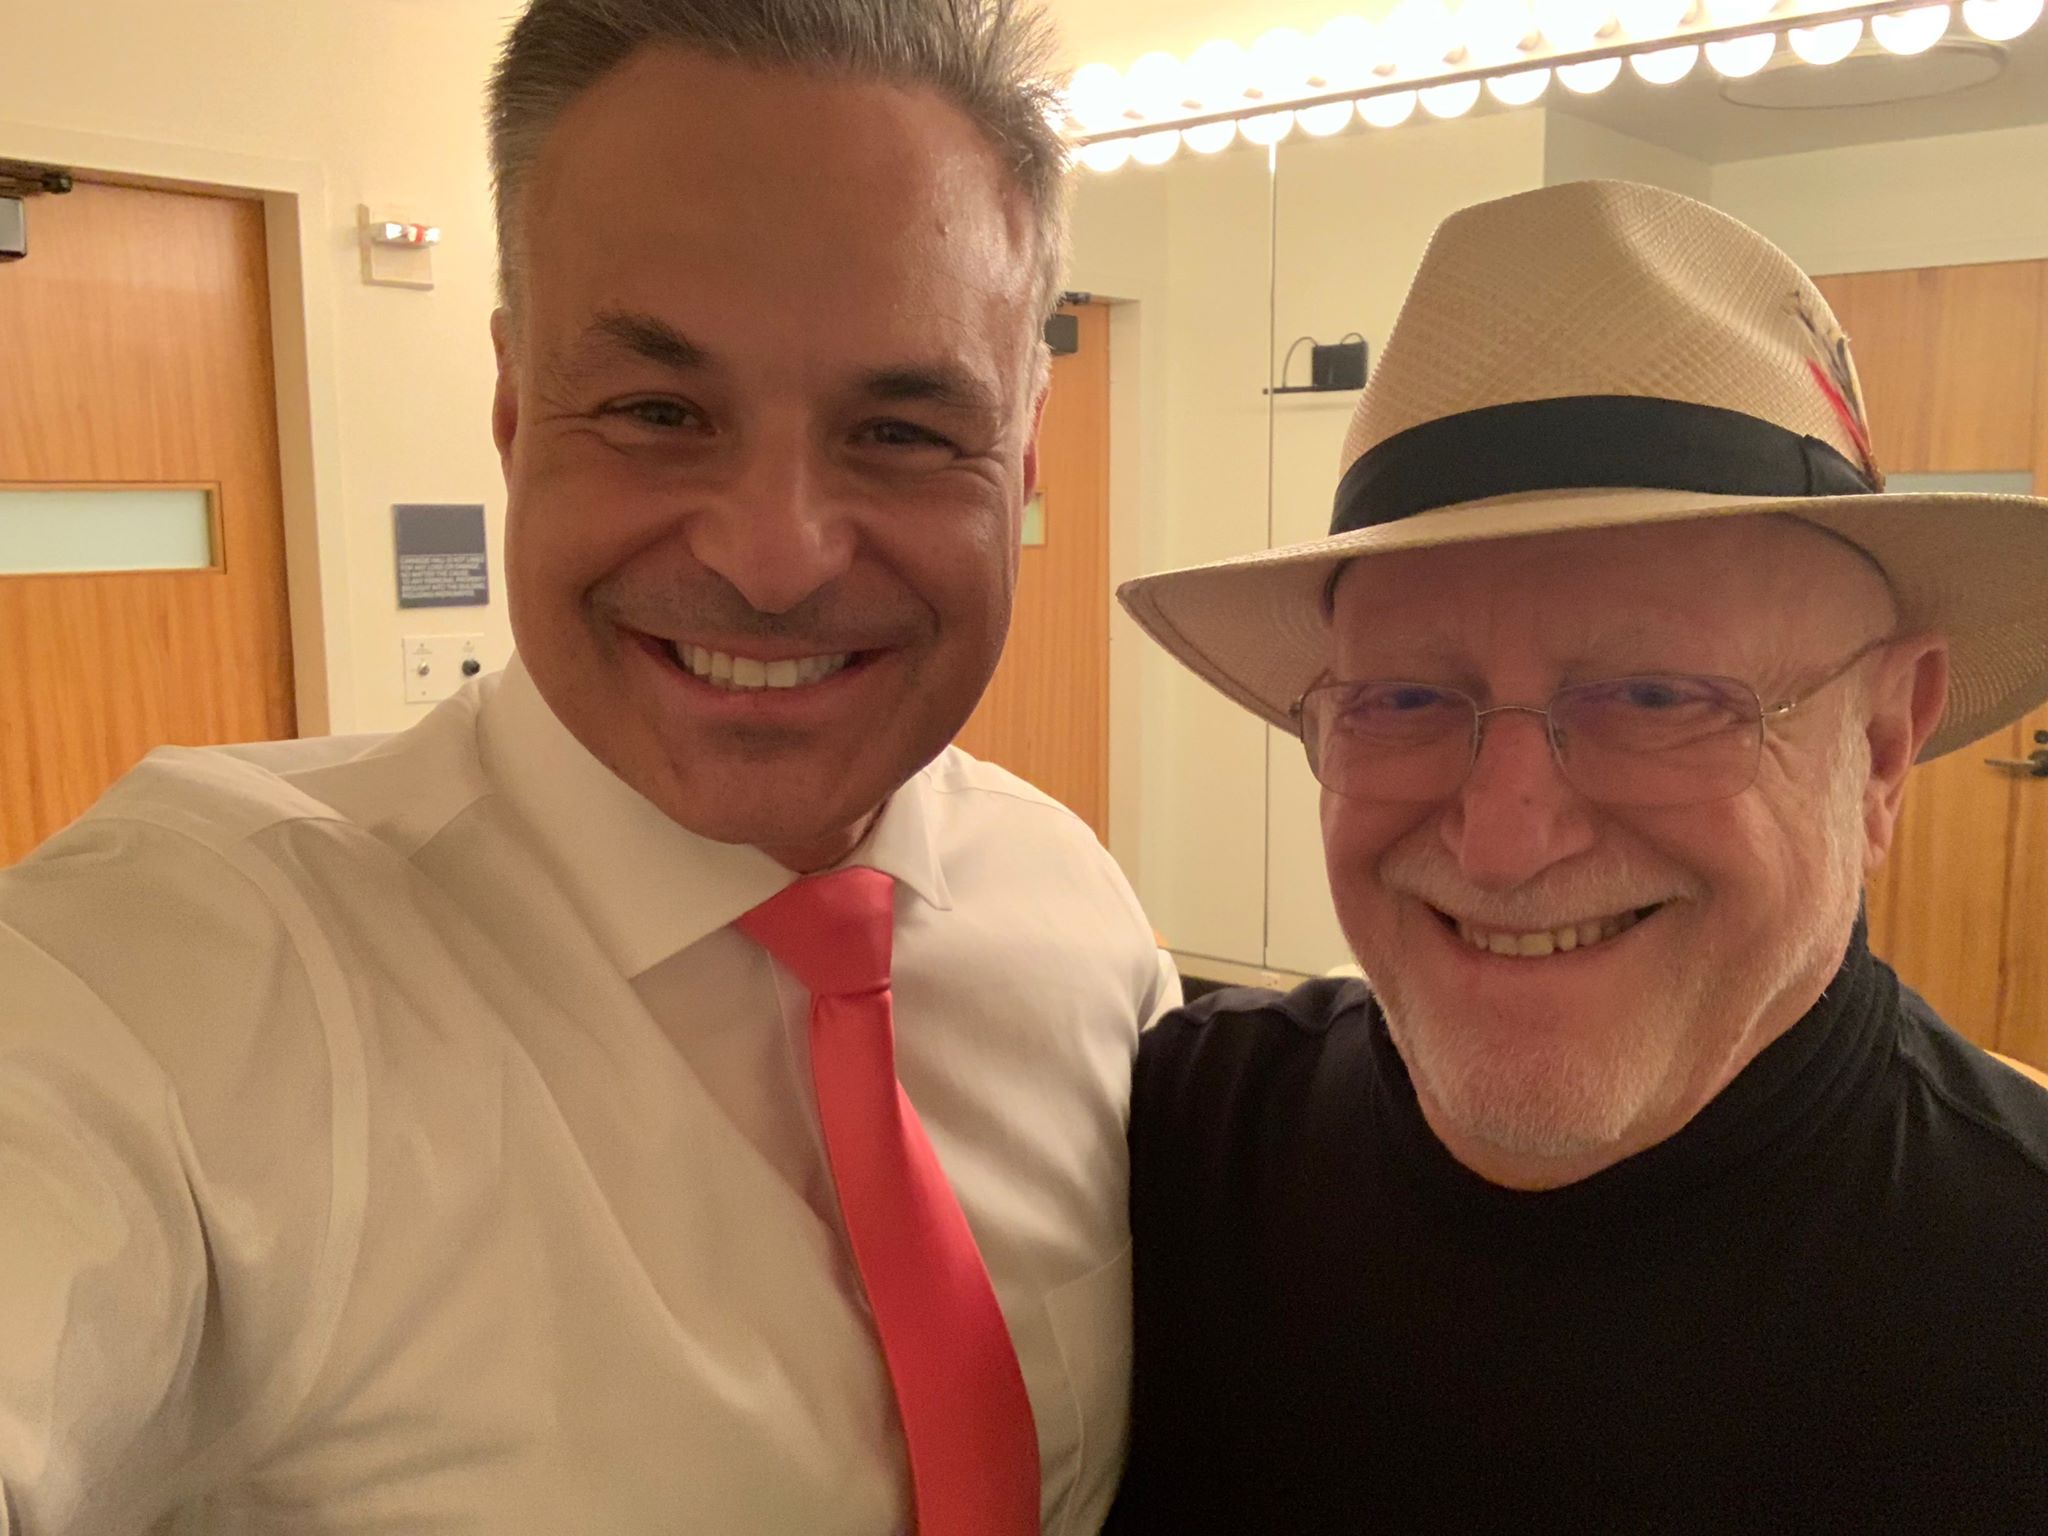 Clint Arthur & Michael E Gerber backstage during “Living Legends of Entrepreneurial Marketing” at Carnegie Hall